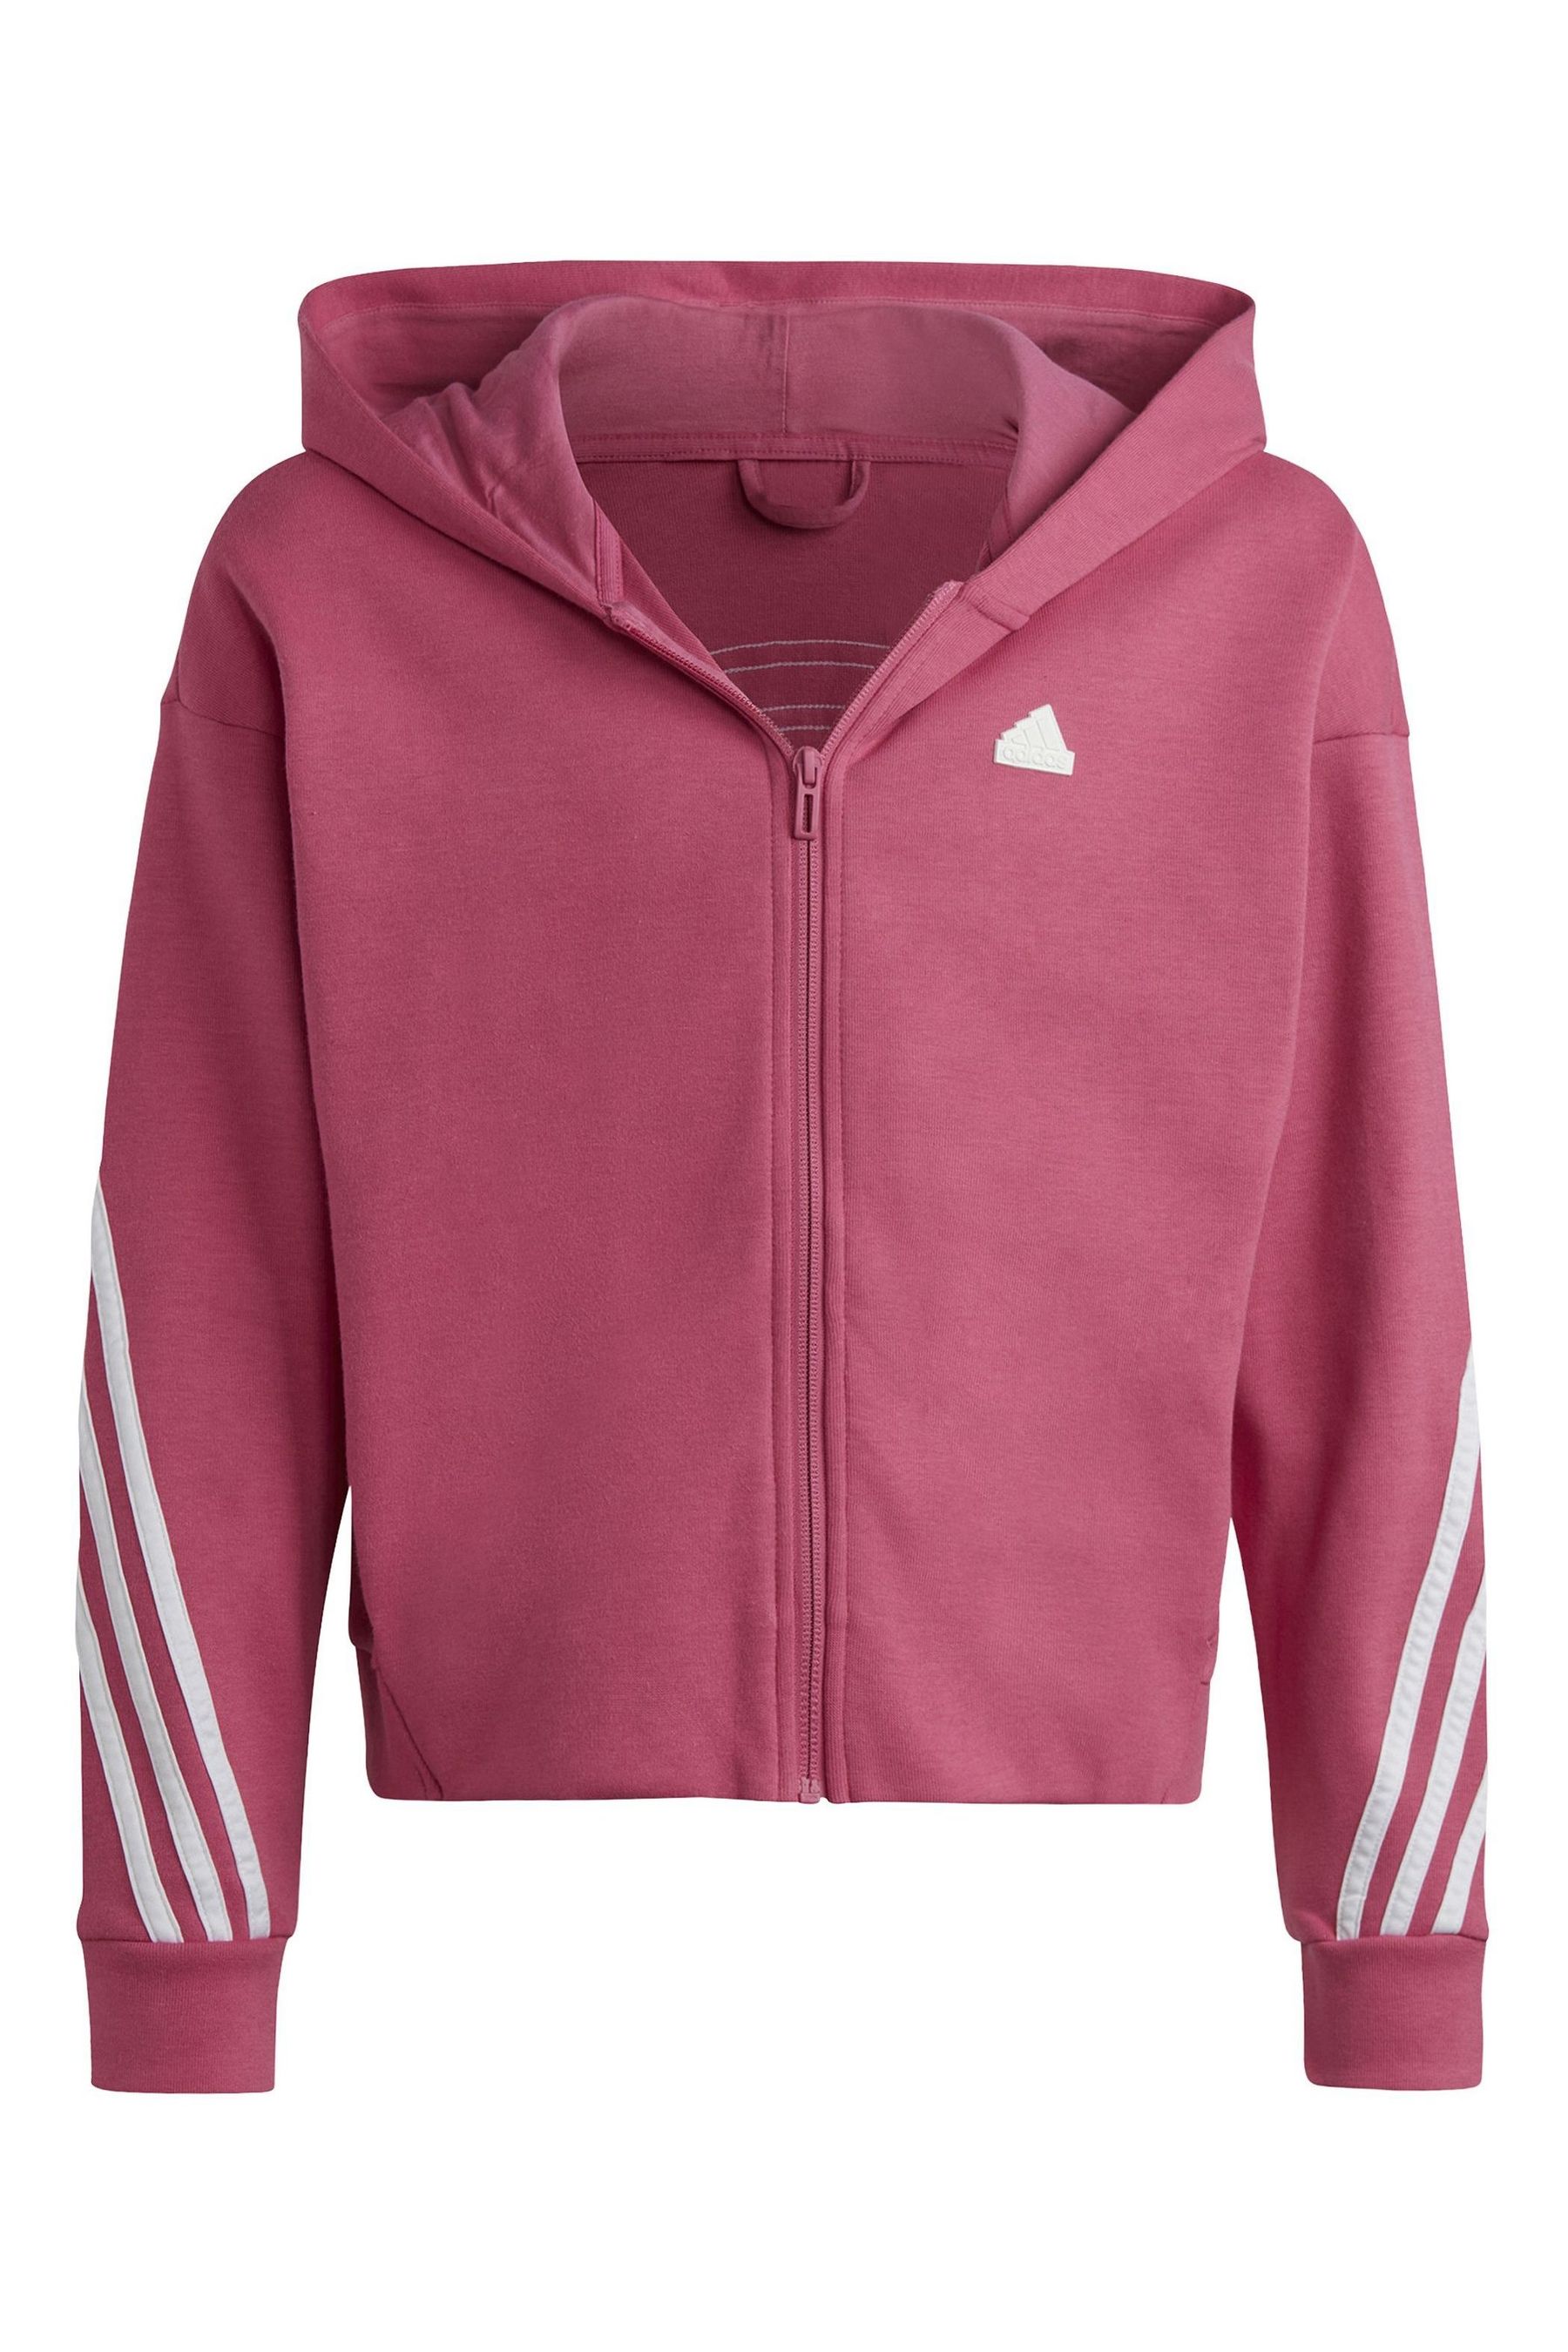 Адидас с розовыми полосками. Adidas Future icon 3-Stripe Full-zip Hoodie Pink. Адидас Фьючер.